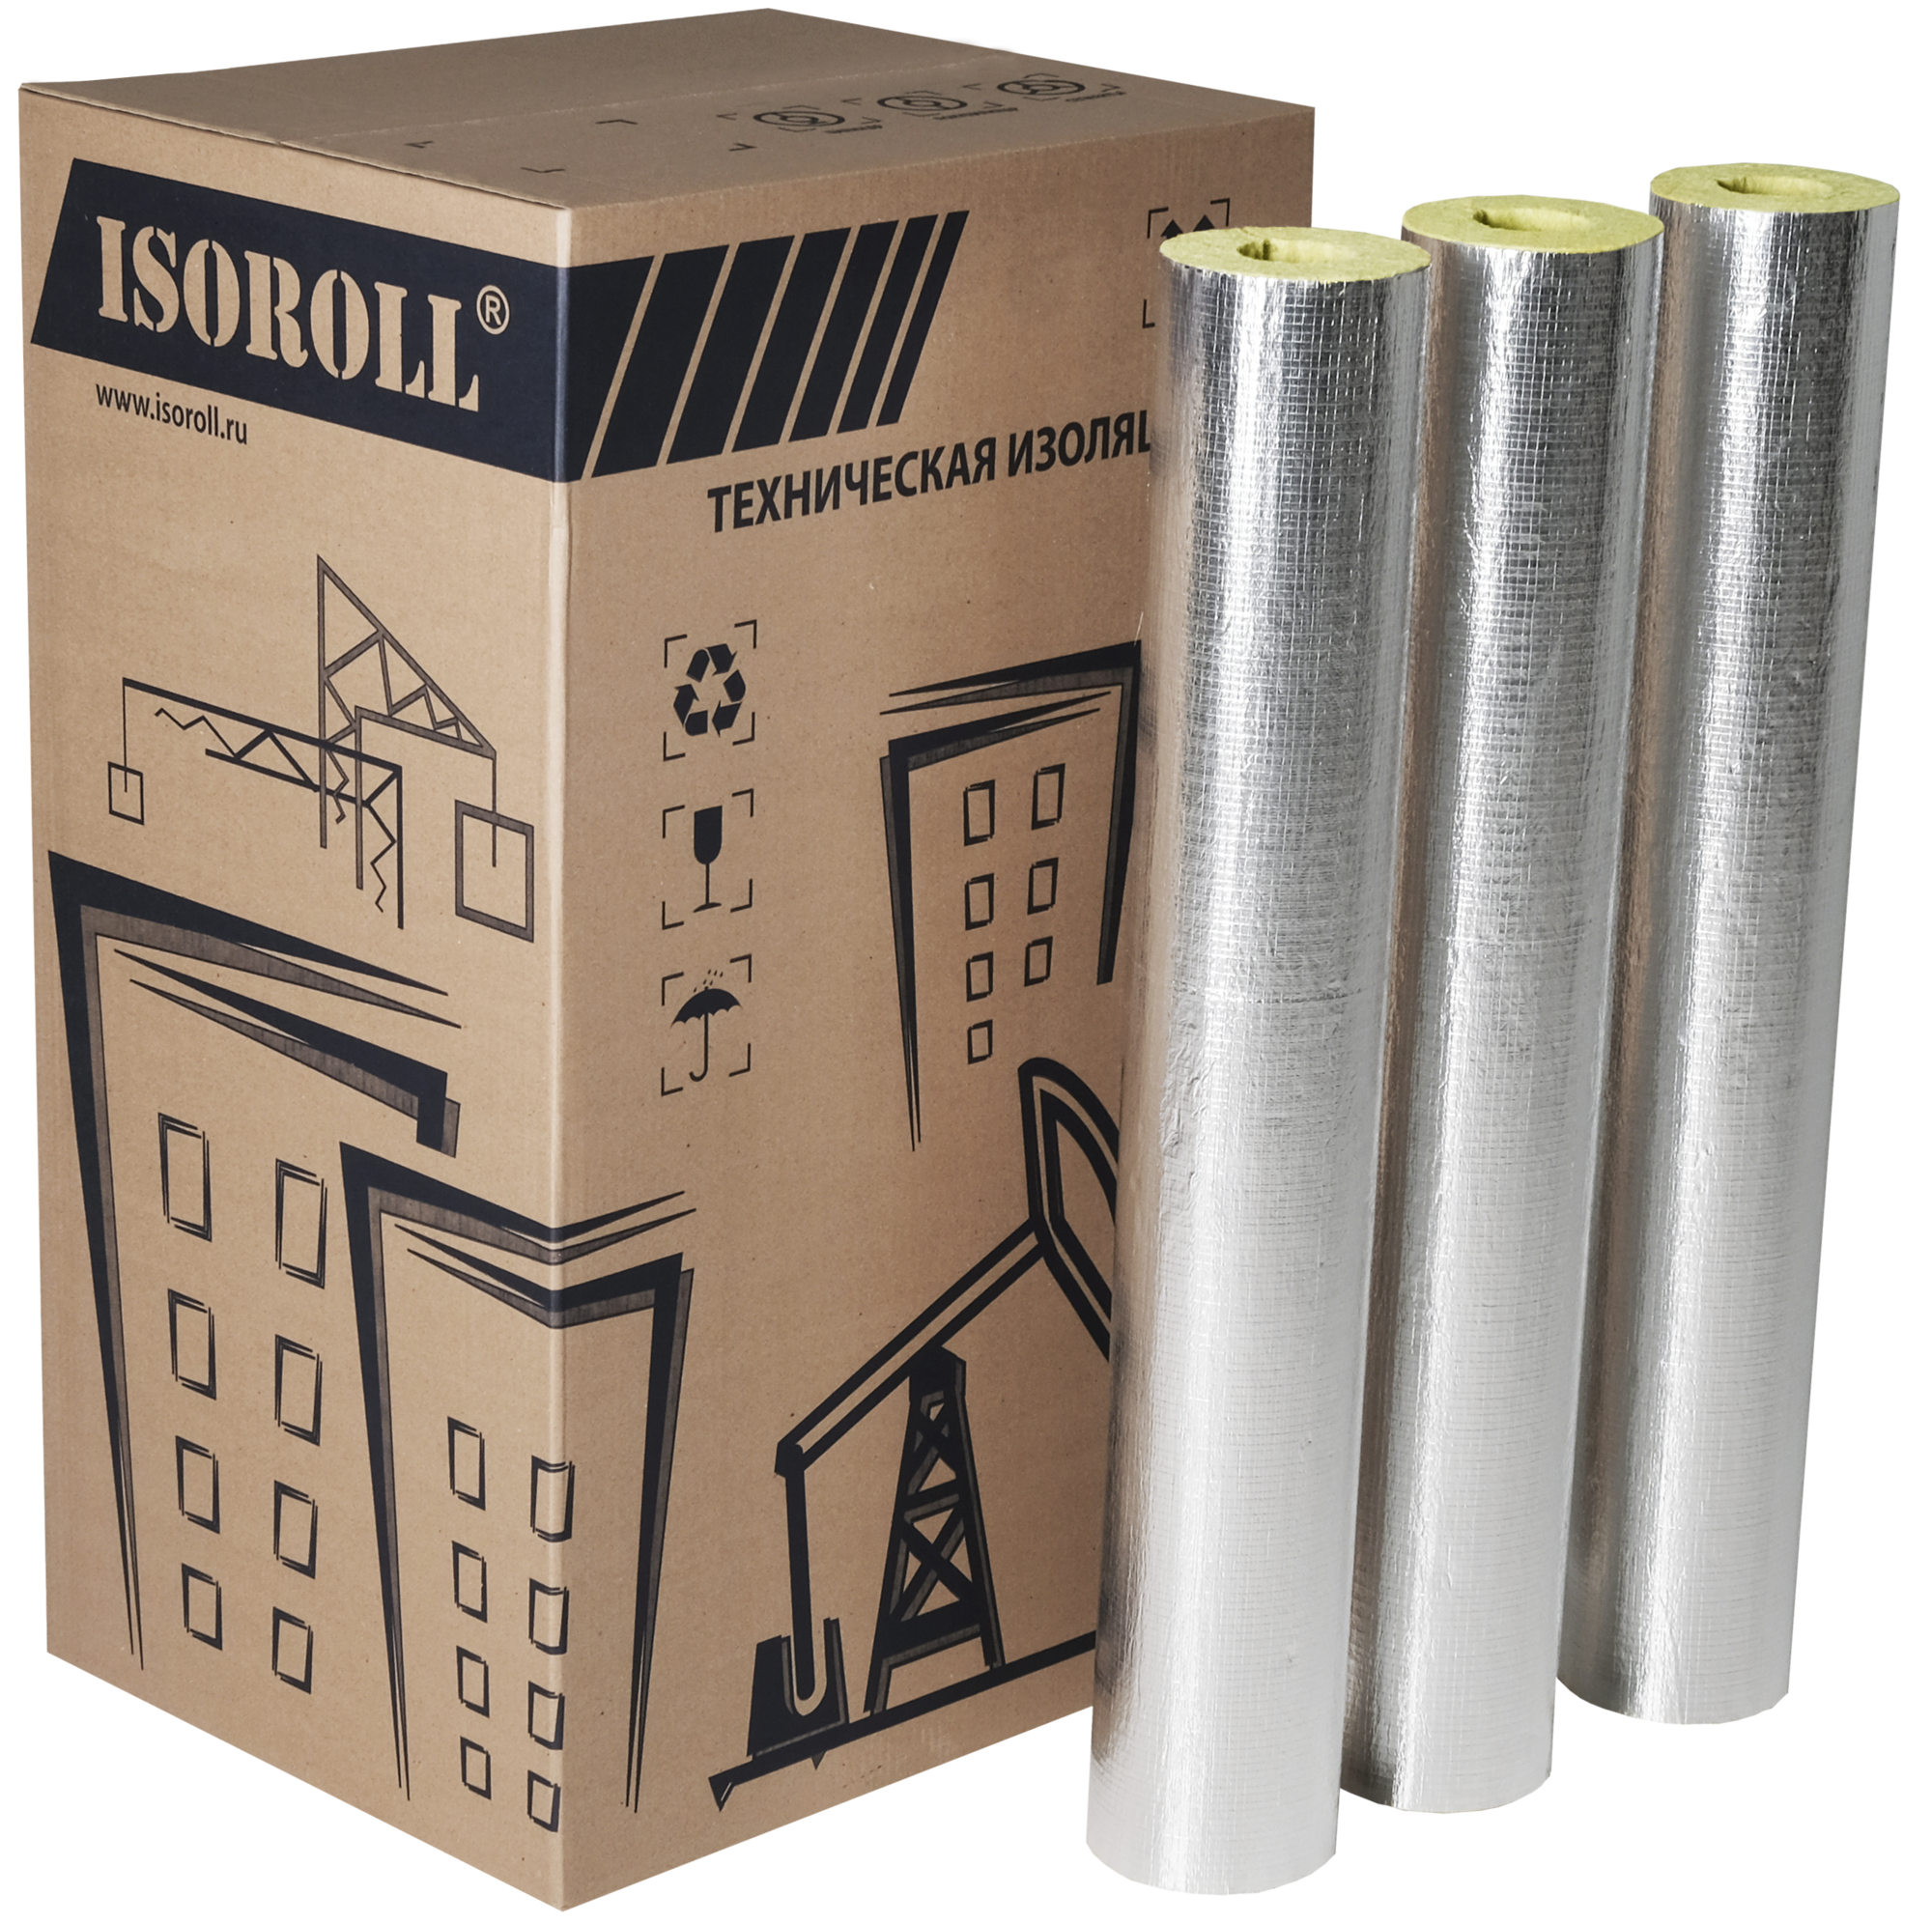 Цилиндр теплоизоляционный Isoroll® с технической фольгой НГ для труб 114 мм x 60 мм